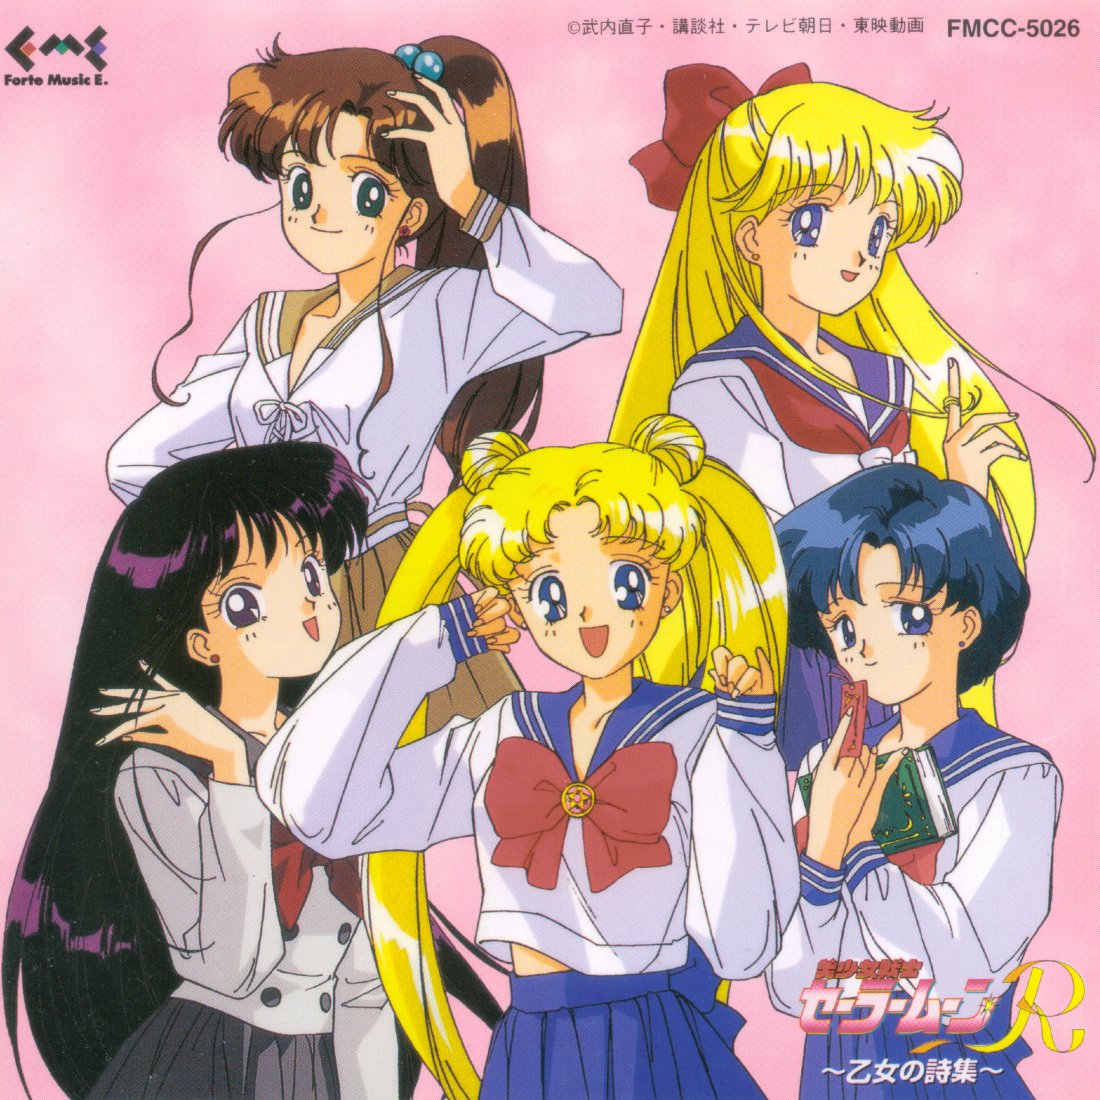 Sailor Moon R HD wallpapers, Desktop wallpaper - most viewed